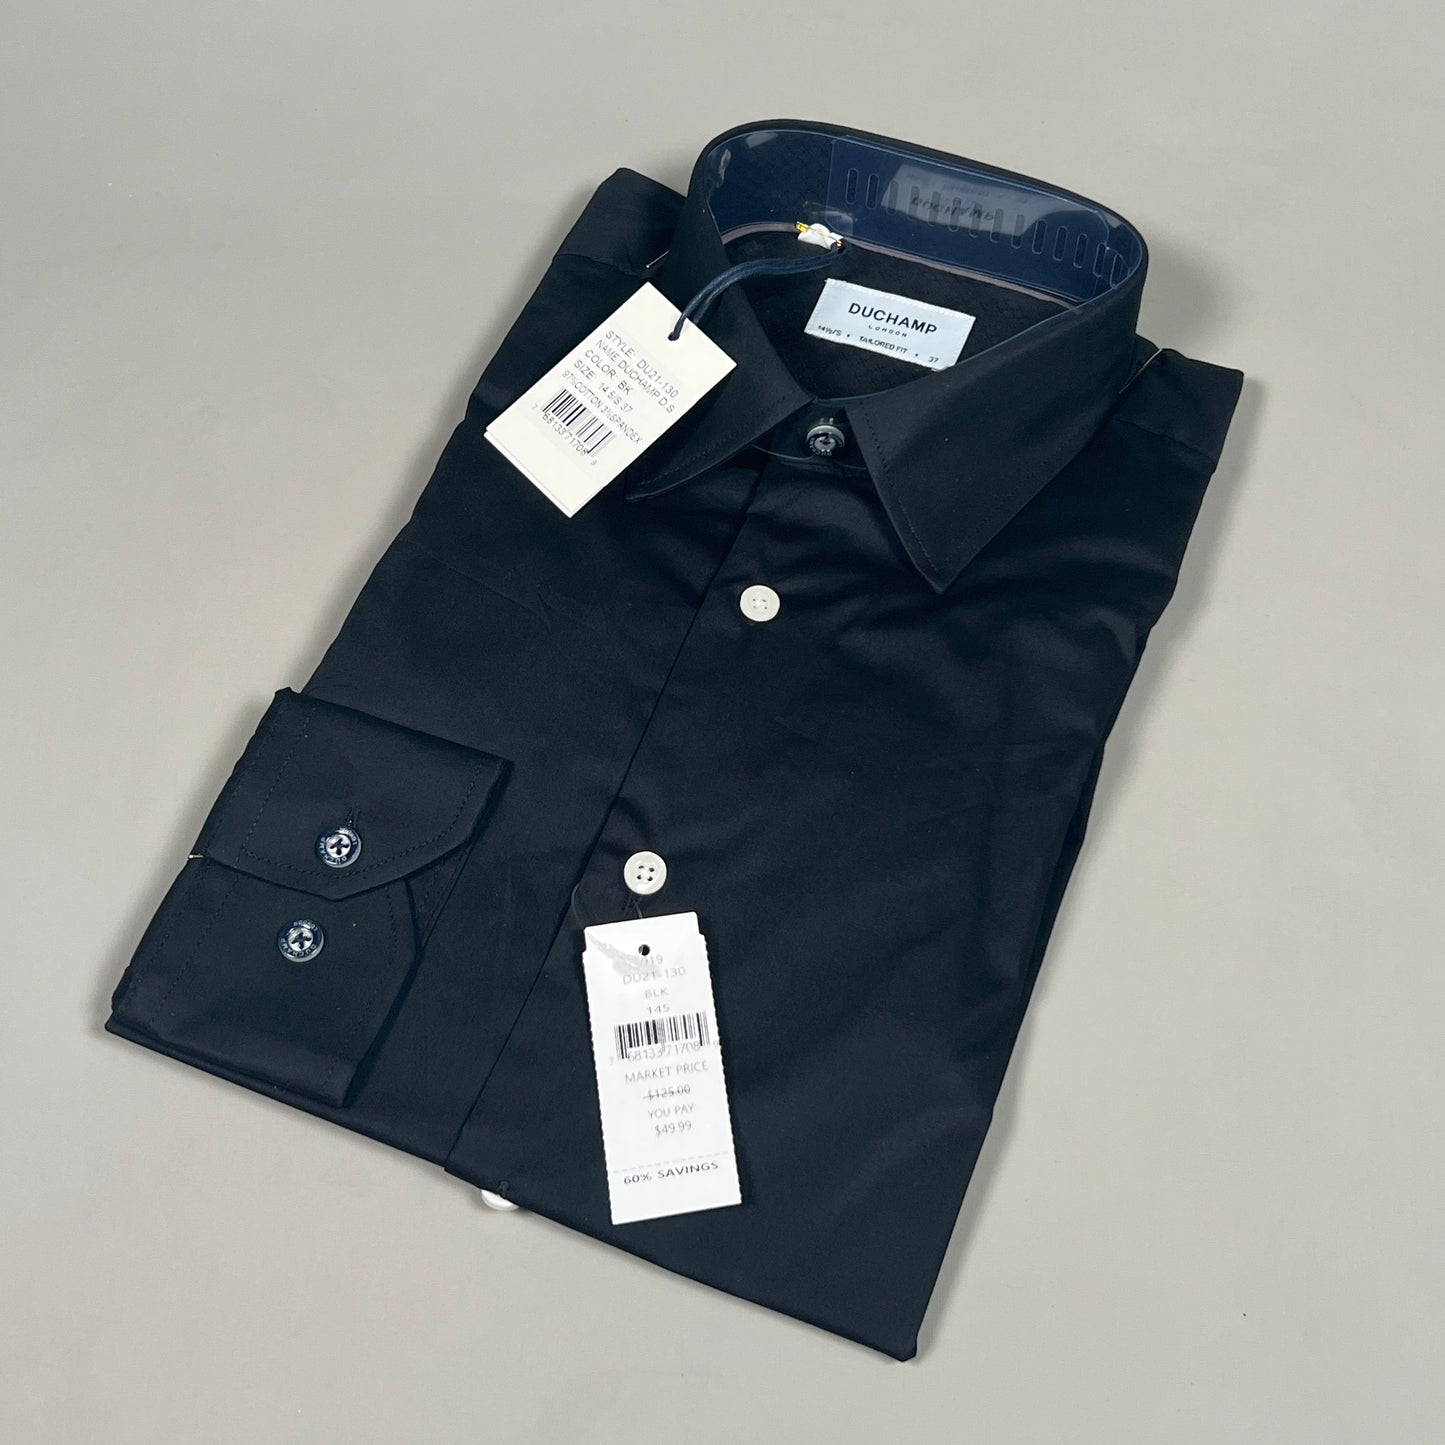 DUCHAMP LONDON Black Solid Tailored-fit Dress Shirt Men's Sz S / 37 / 14.5 (New)